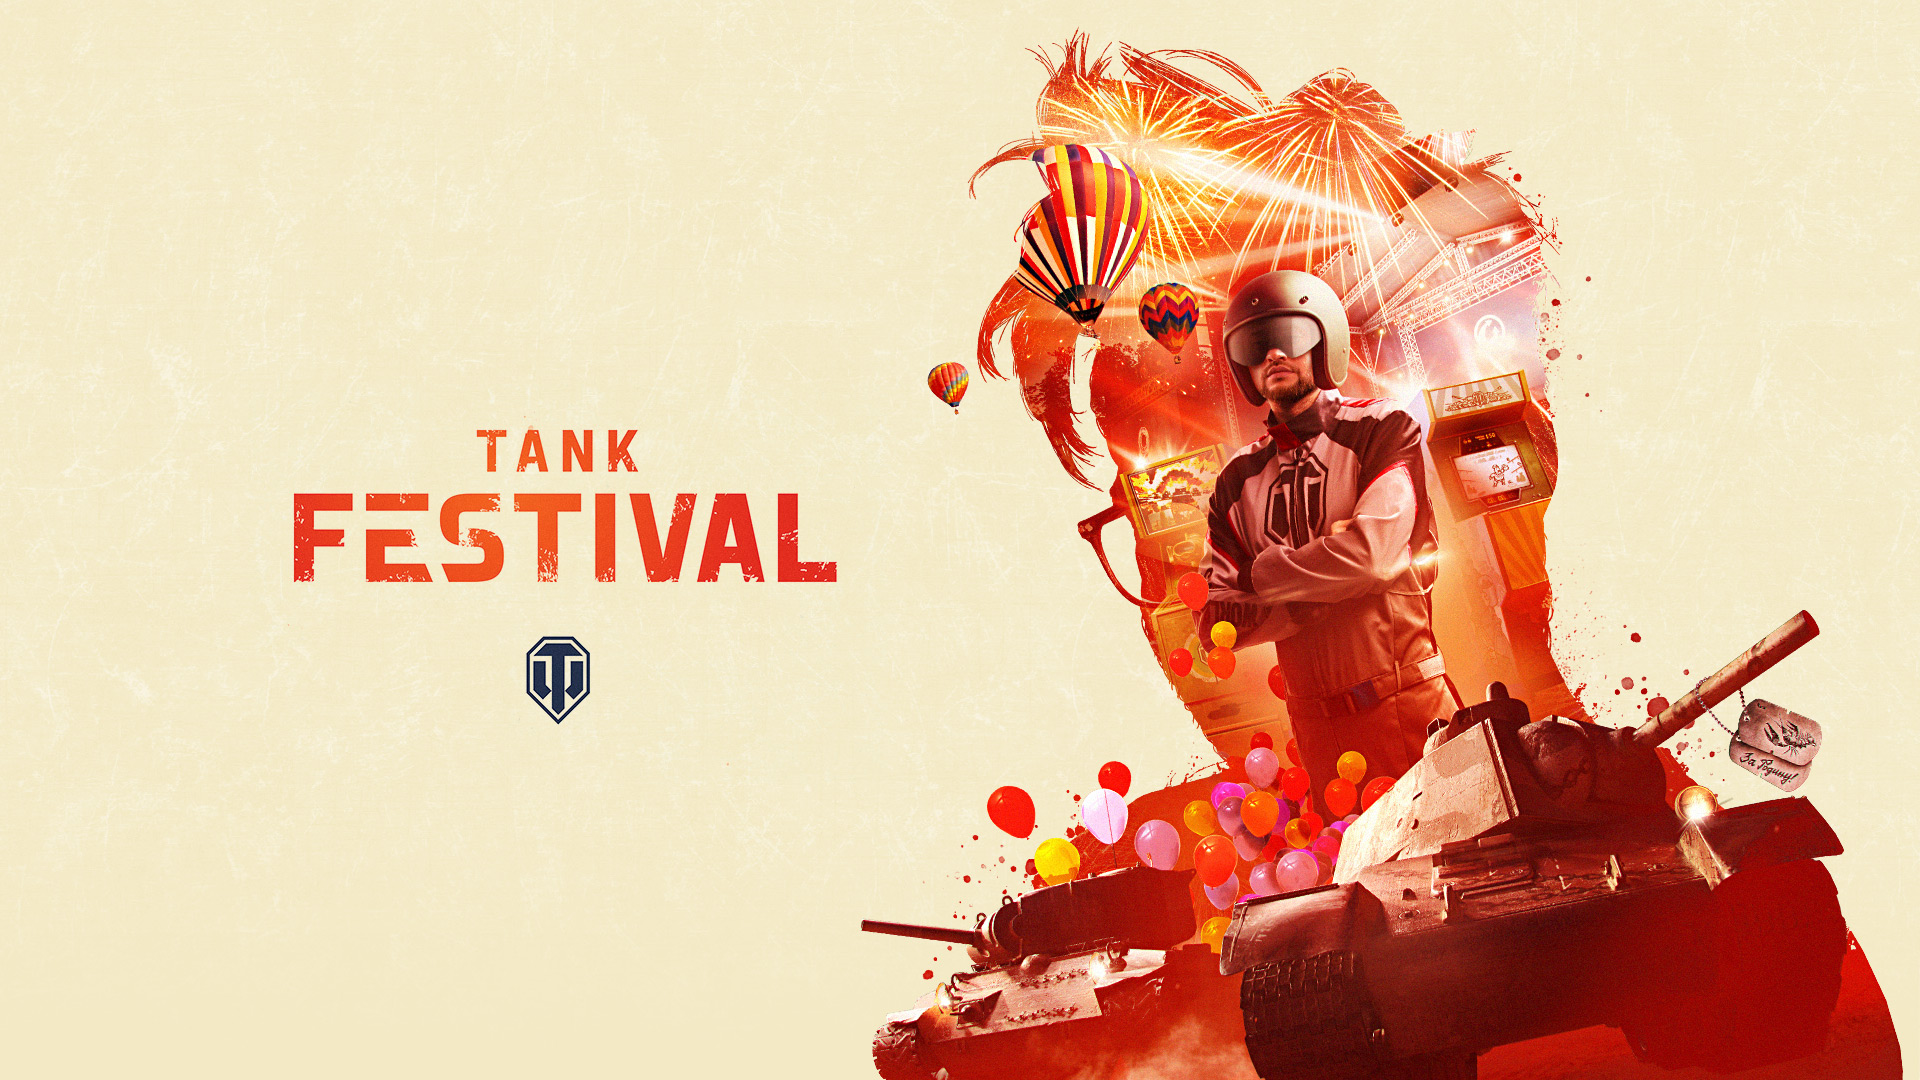 World Of Tanks 初となる Tank Festival の開催が決定 新ゲームモードやフロントラインなど 2か月にわたり様々なアクティビティが満載 ウォーゲーミングジャパン株式会社のプレスリリース